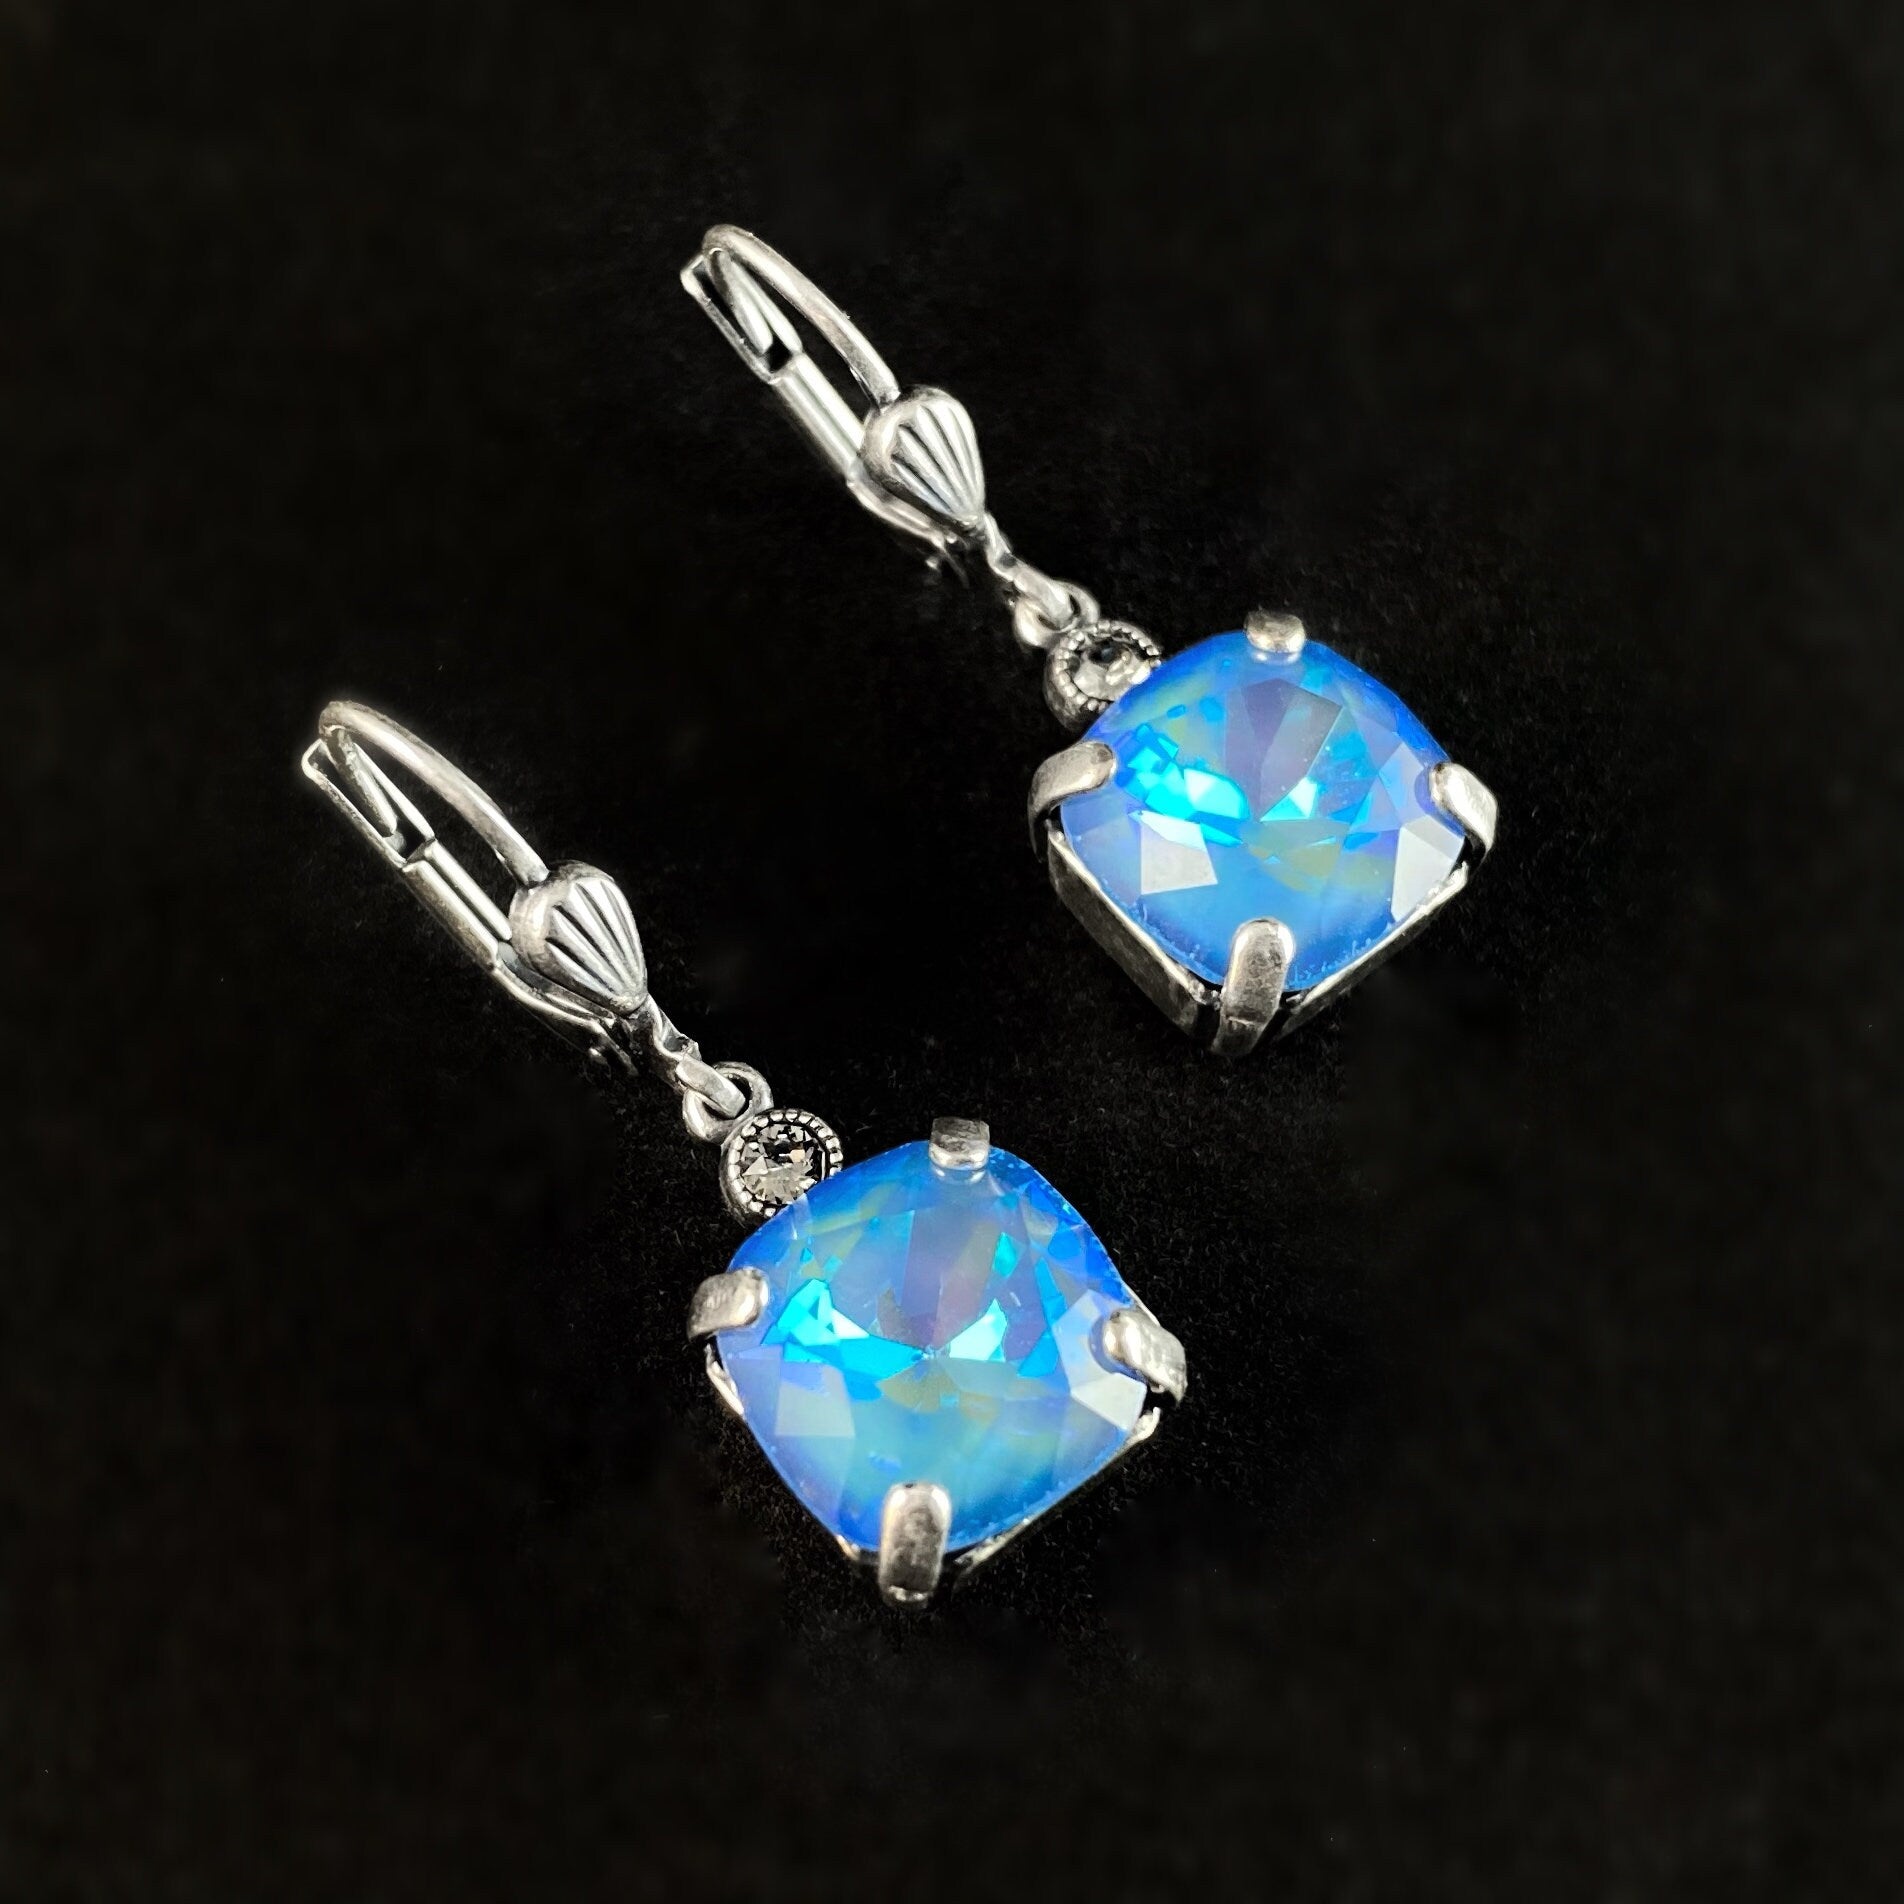 Blue Square Cut Swarovski Crystal Drop Earrings - La Vie Parisienne by Catherine Popesco